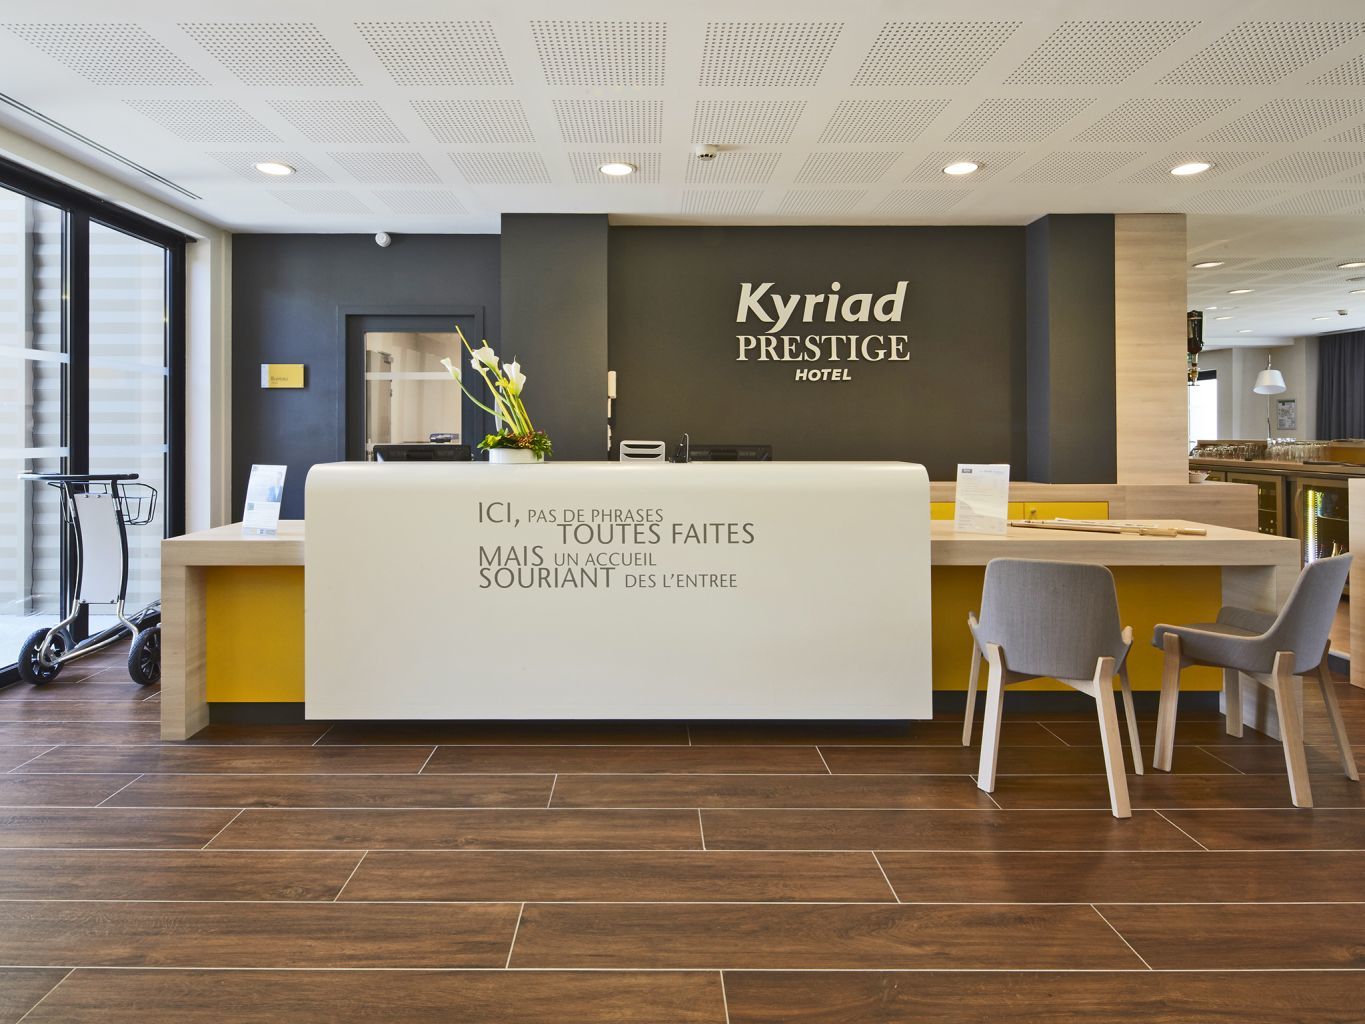 Hôtel Kyriad Prestige**** (photo 2)